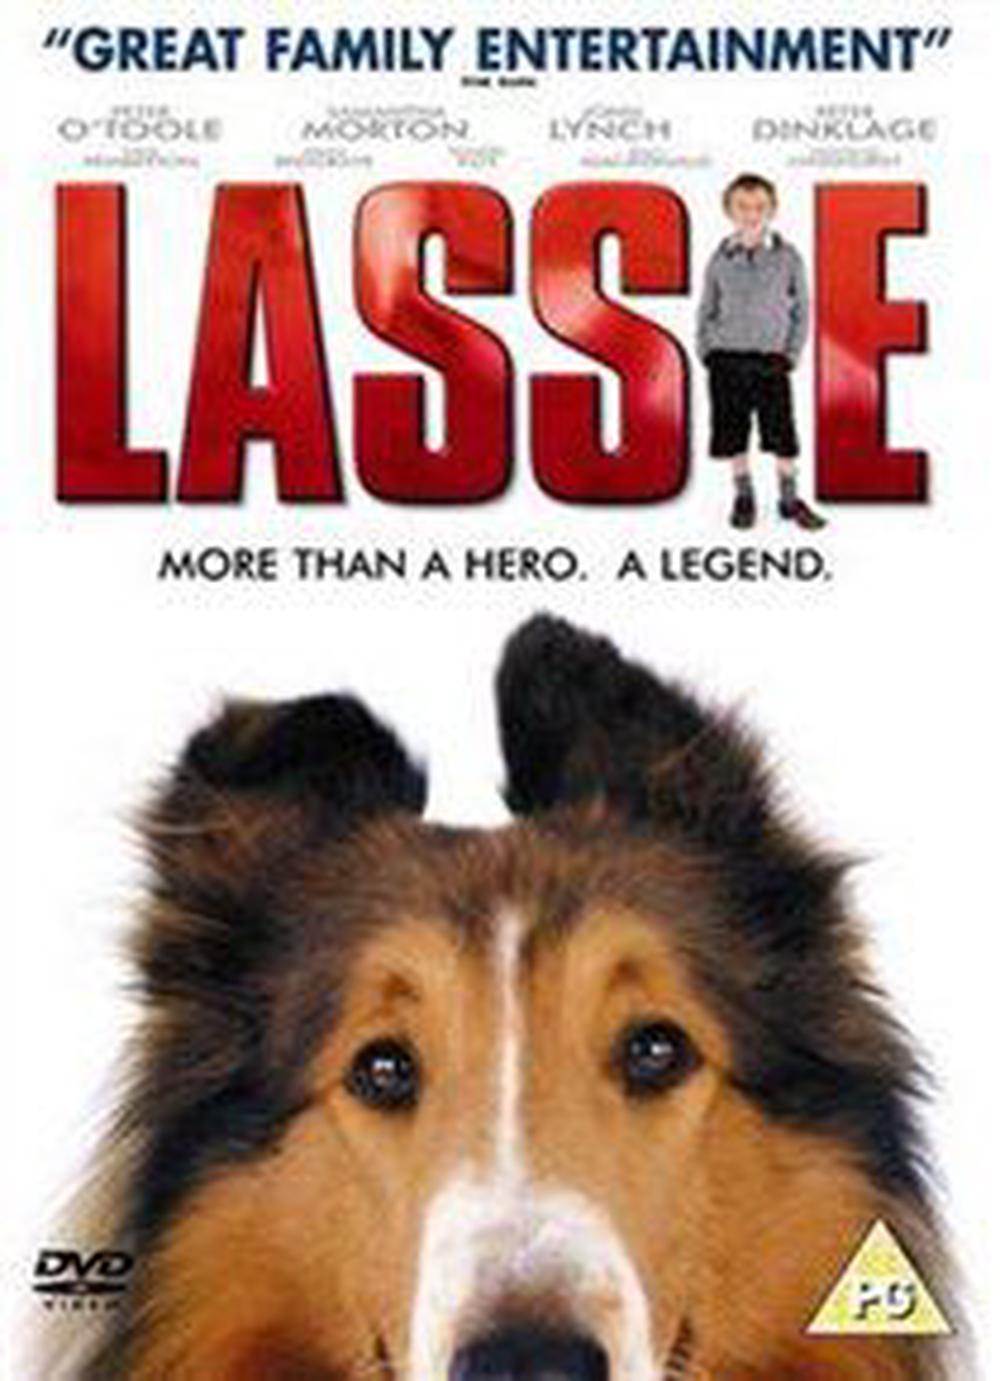 Lassie Dvd Region 2 Free Shipping 5017239193767 Ebay